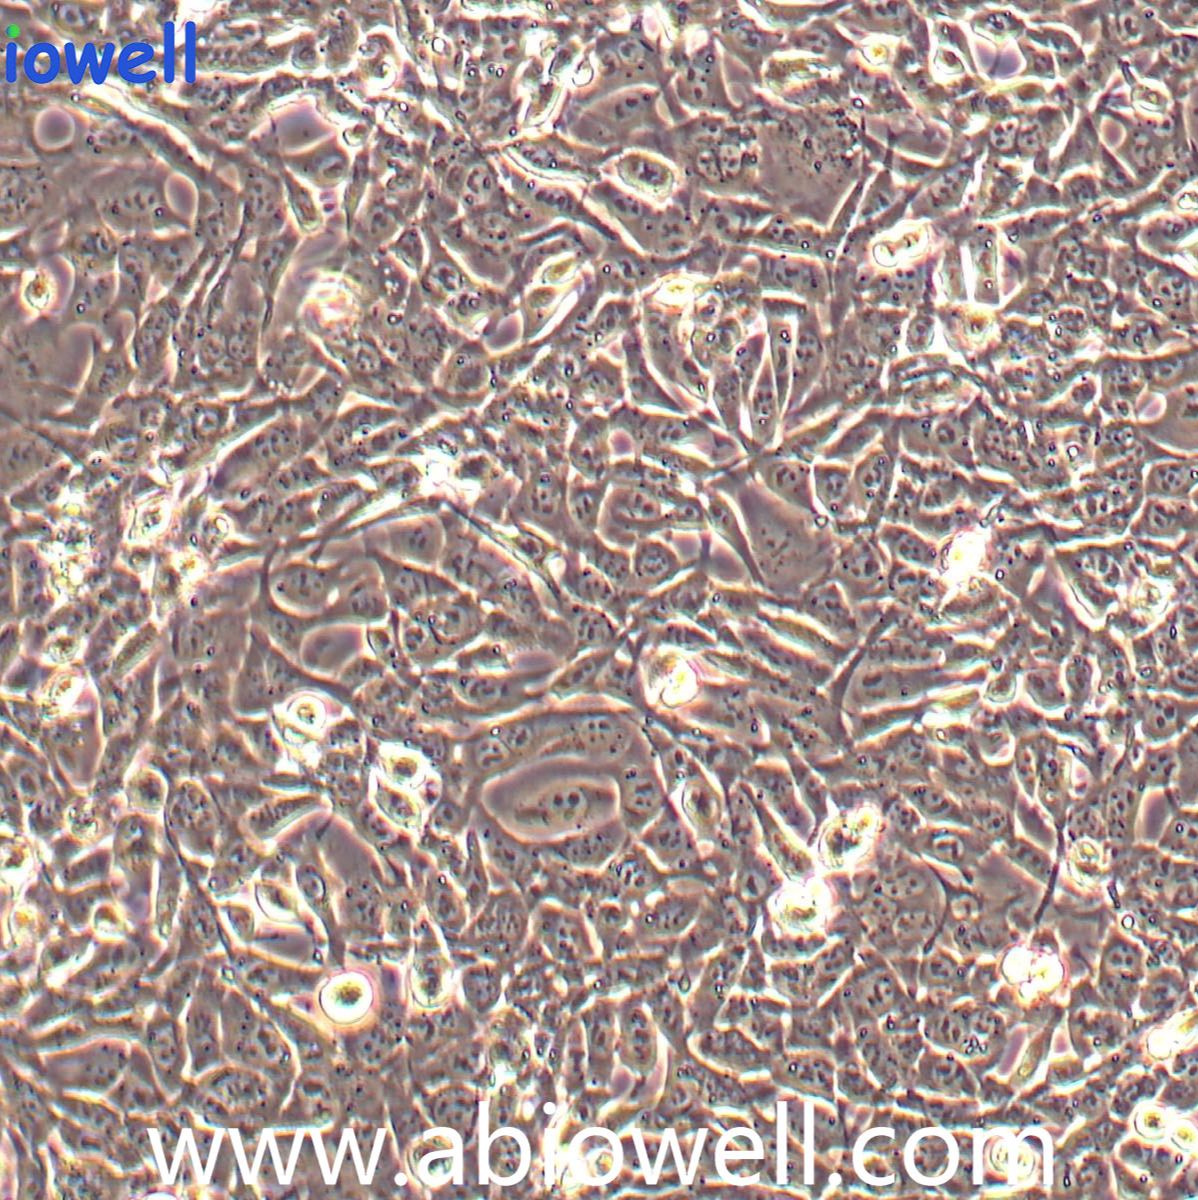 TC-1小鼠肺上皮细胞